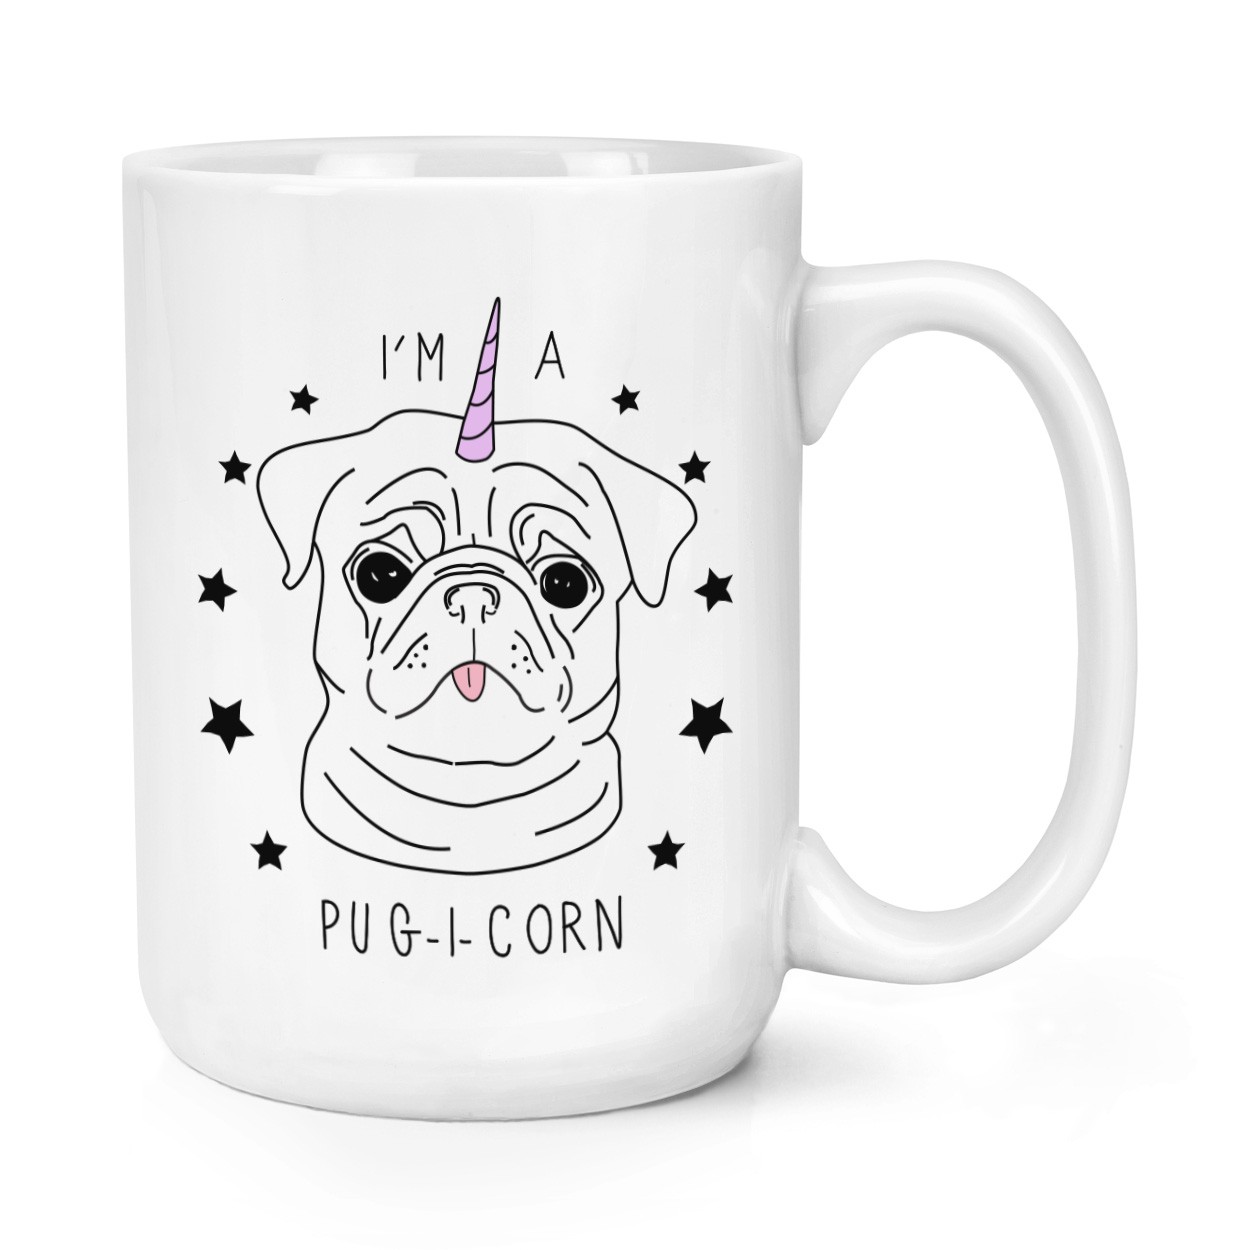 I'm A Pugicorn Stars 15oz Large Mug Cup